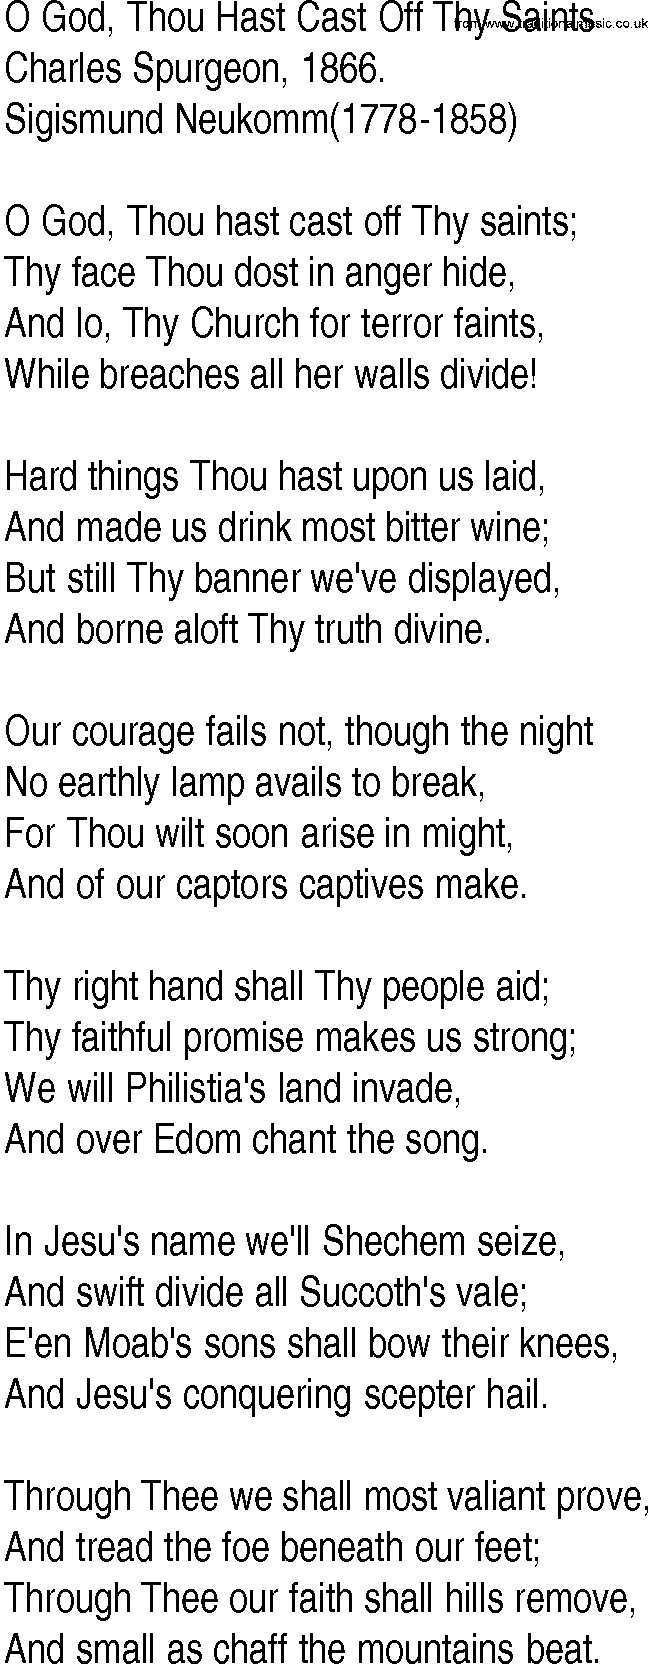 Hymn and Gospel Song: O God, Thou Hast Cast Off Thy Saints by Charles Spurgeon lyrics